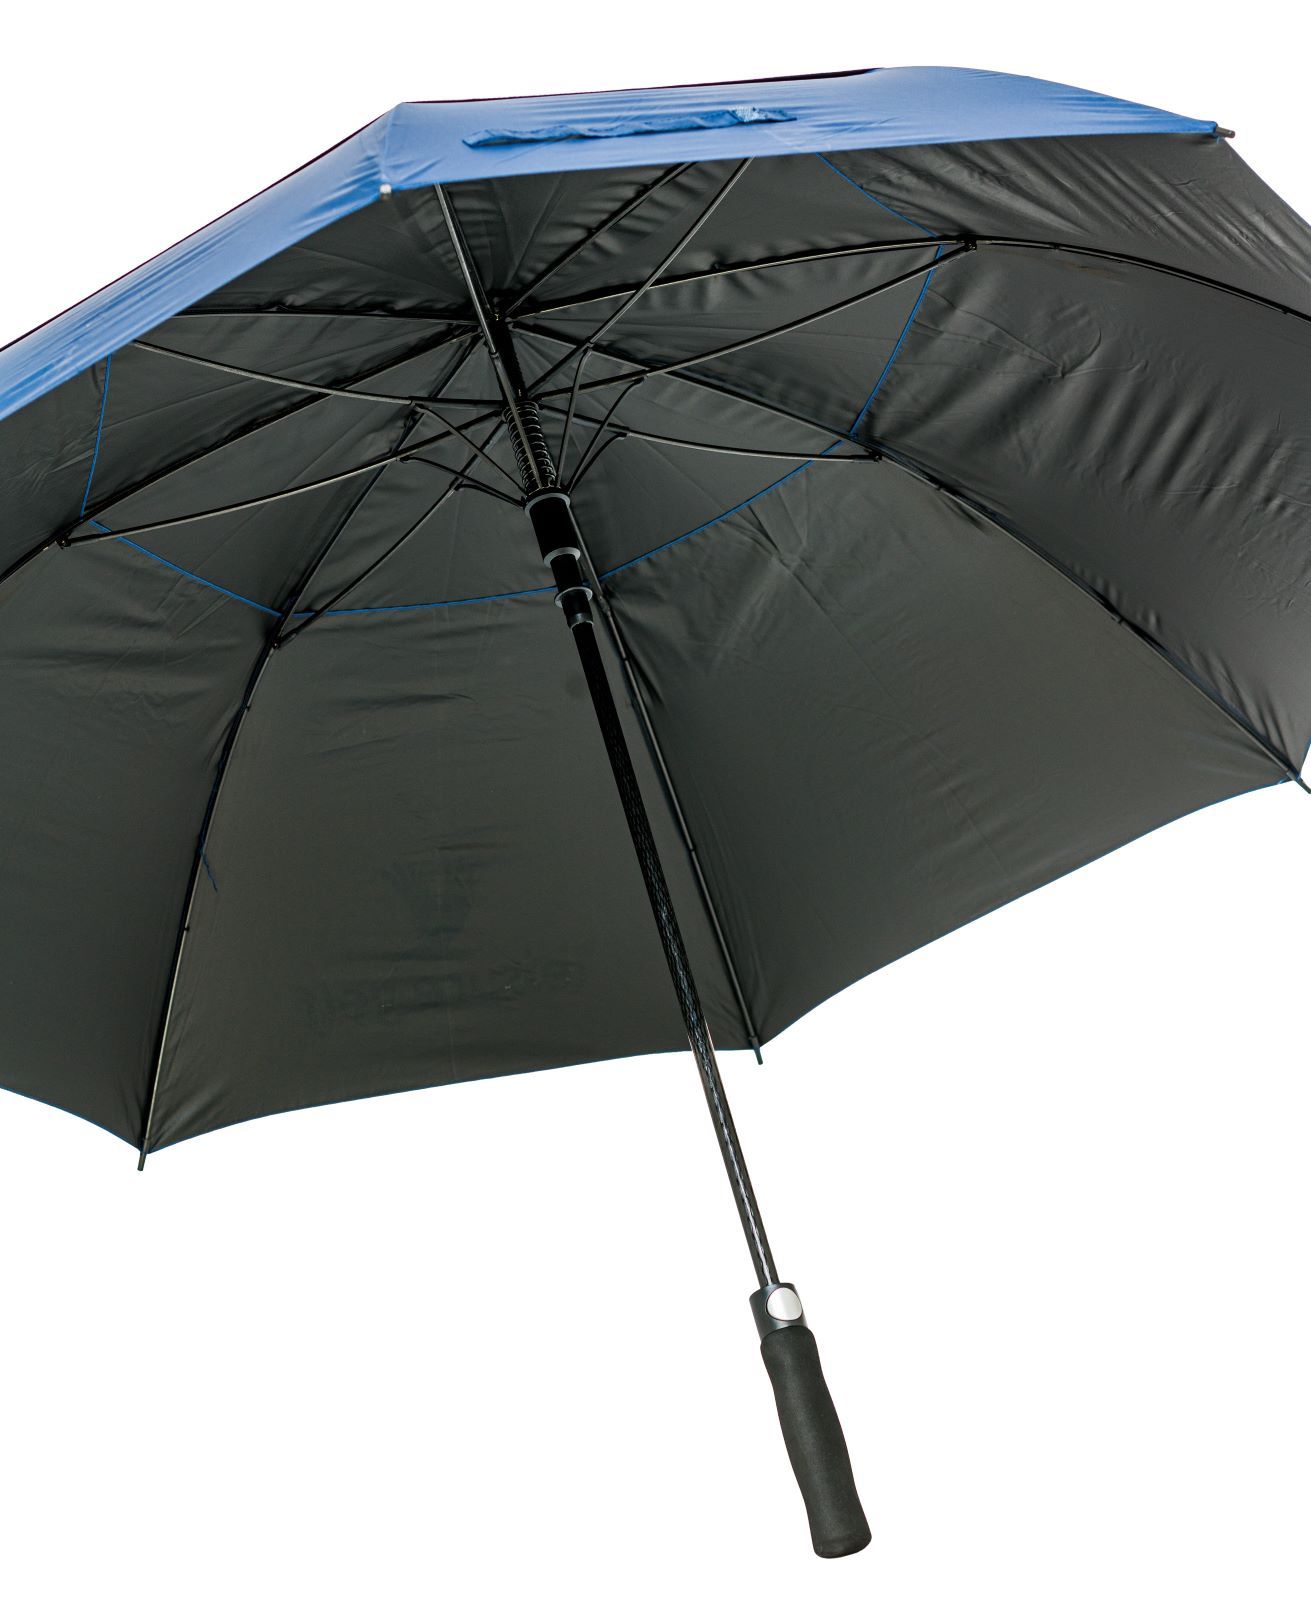 Golf umbrella Leisure Golf UV Black/ Red